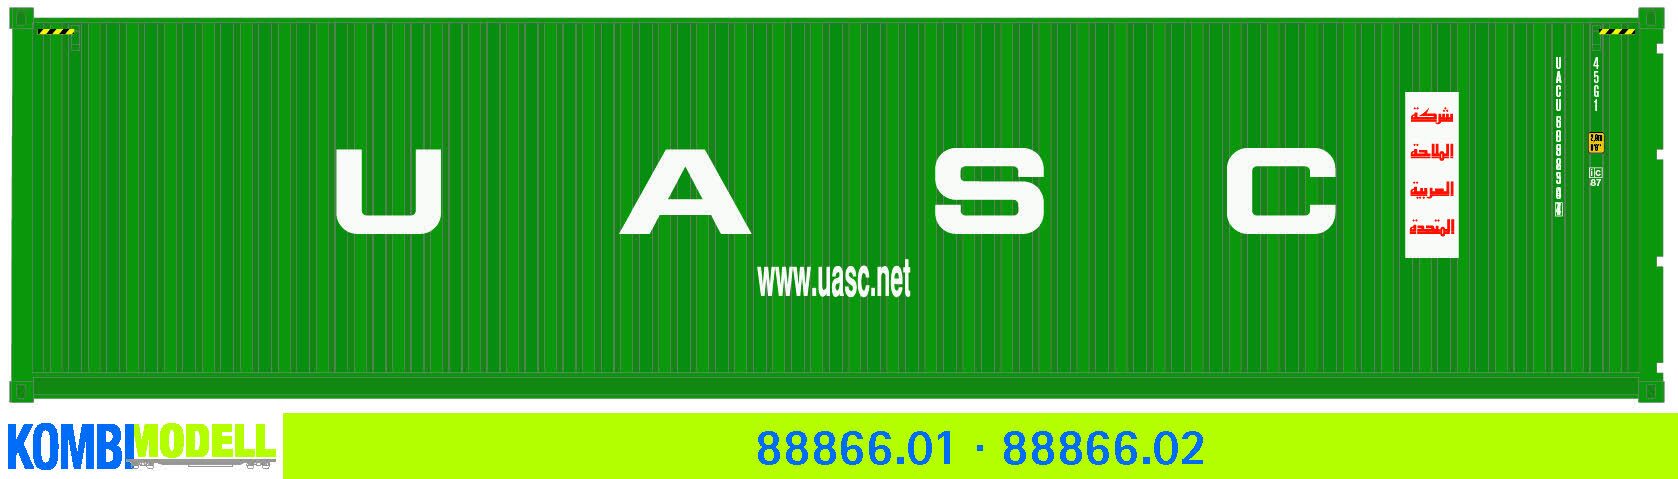 Kombimodell 88866.01 Ct 40' (45G1) »UASC« (grün) ═ SoSe 